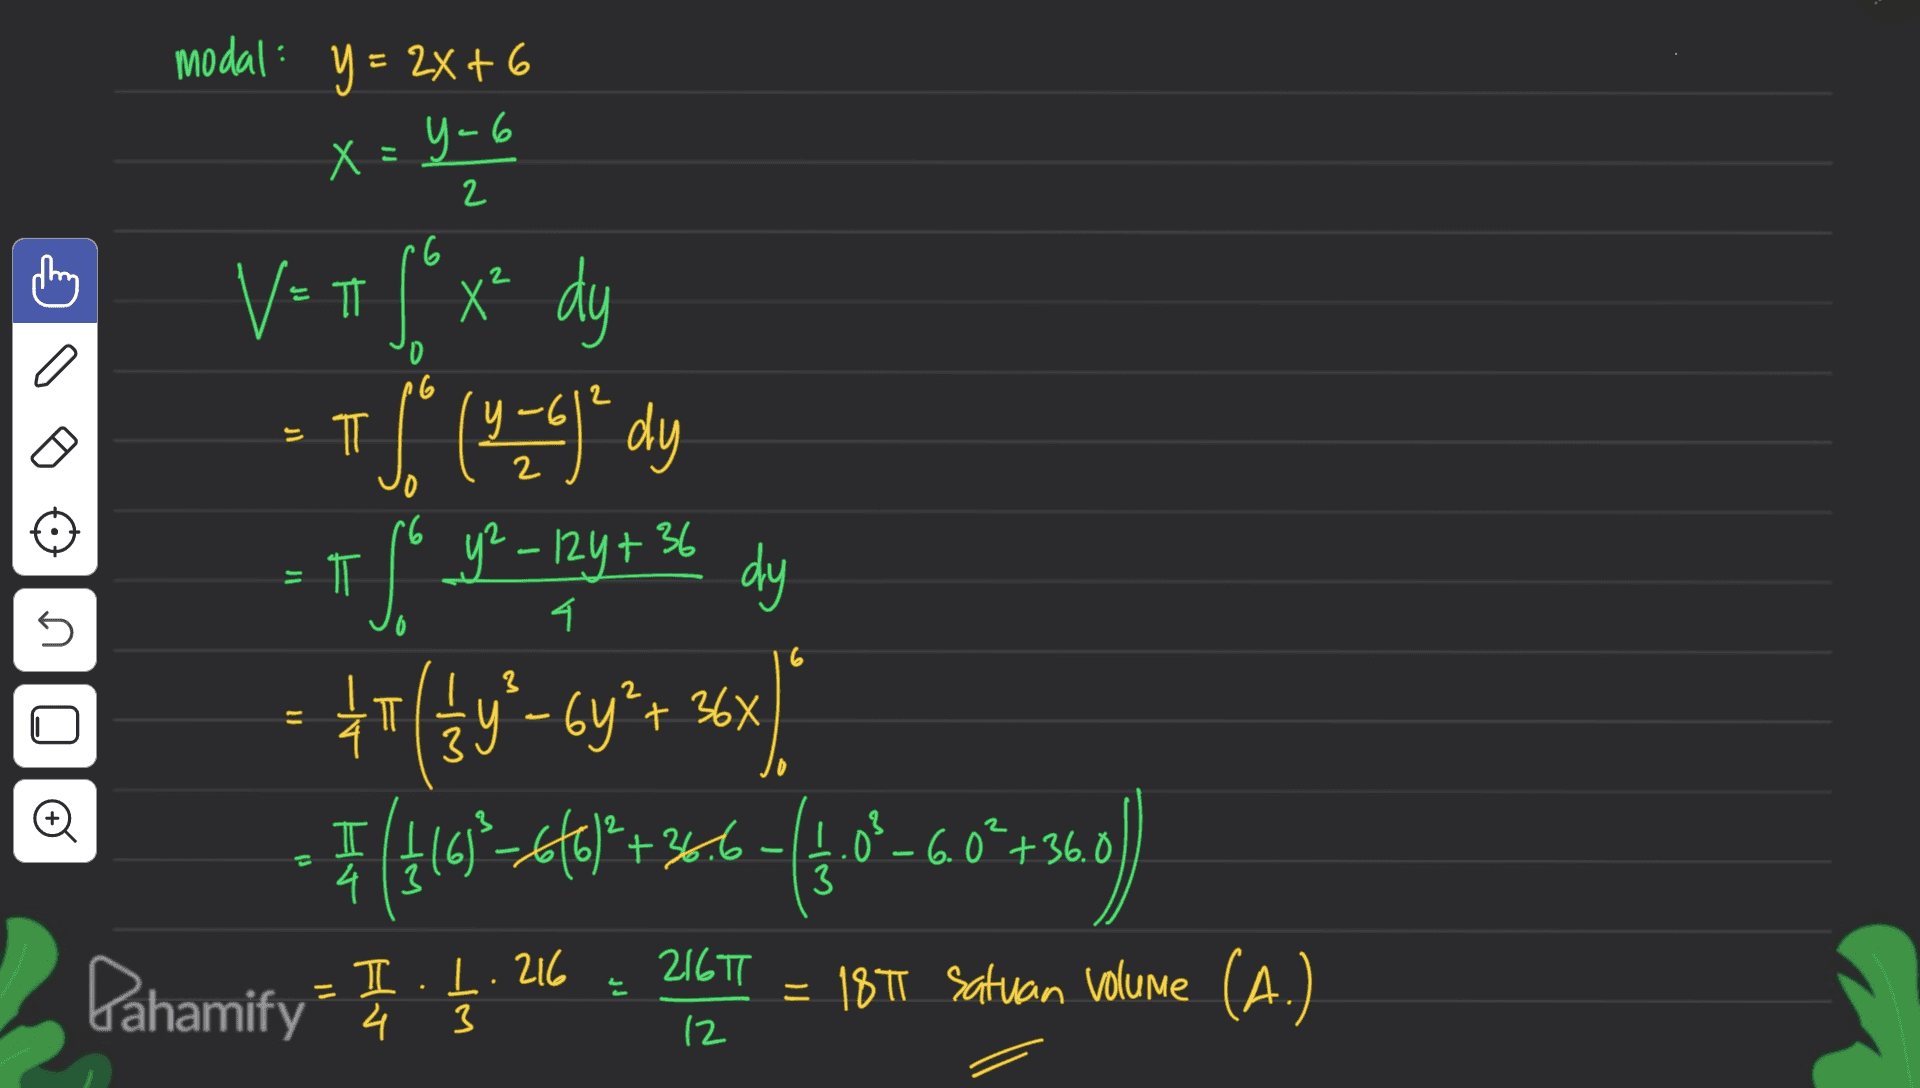 modal: y= 2x+6 E X=Y-6 2 6 2 TT o nG 2 26 T y²-12y+? 36 4. 5 V= ( x dy V TJ (4 - 6 Judy f dy **(*y*=6y*+ 3x) + I ( + 163-646)²+36.6 +( 1.03_6.0²+36.0 365) Pahamify I } = 18 T Satuan Volume (A.) 3 U U t 4 216T - I.1. 216 3 = 12 